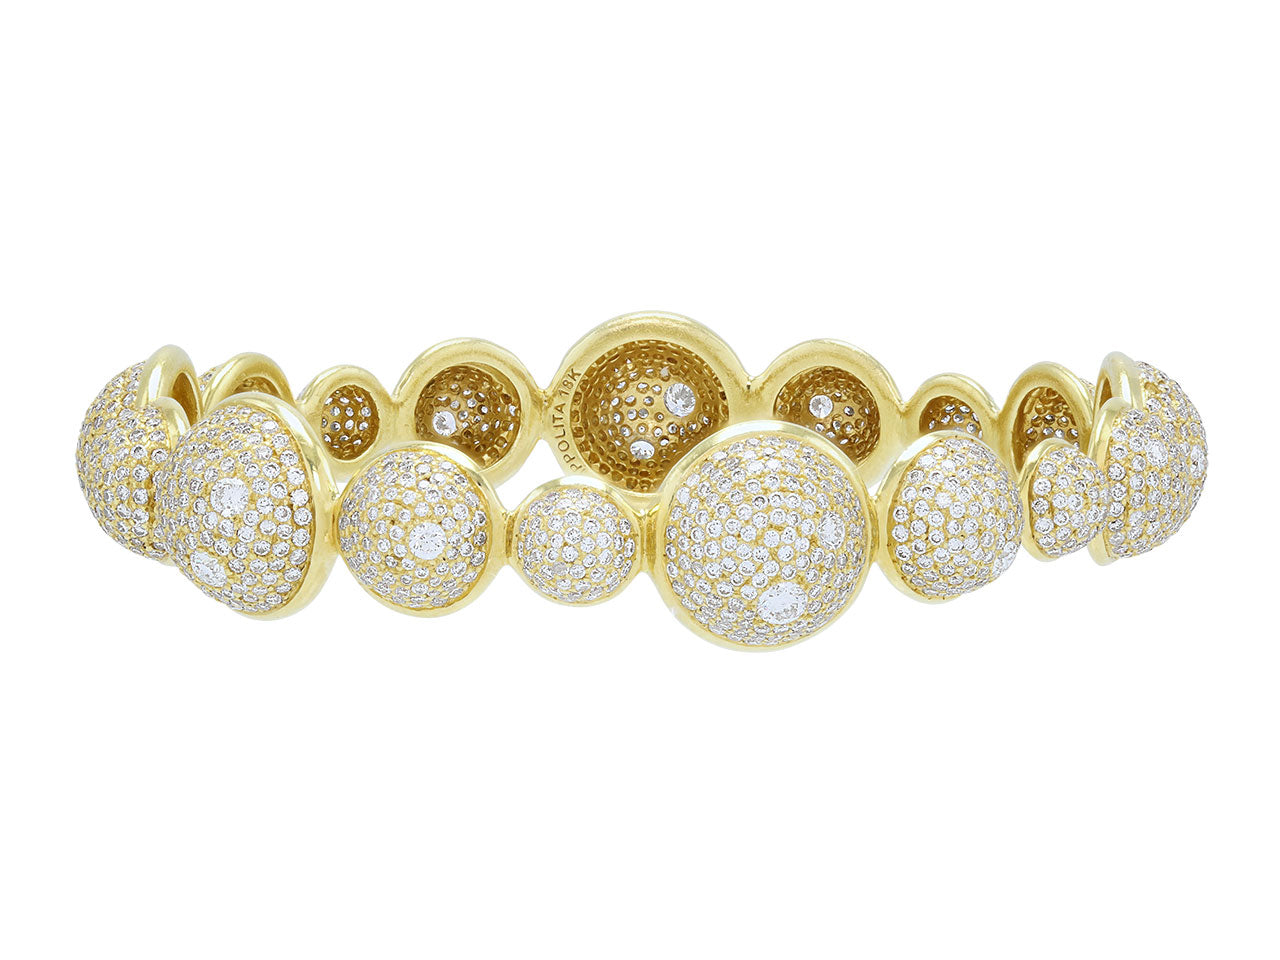 Ippolita 'Stardust' Diamond Bangle Bracelet in 18K Gold